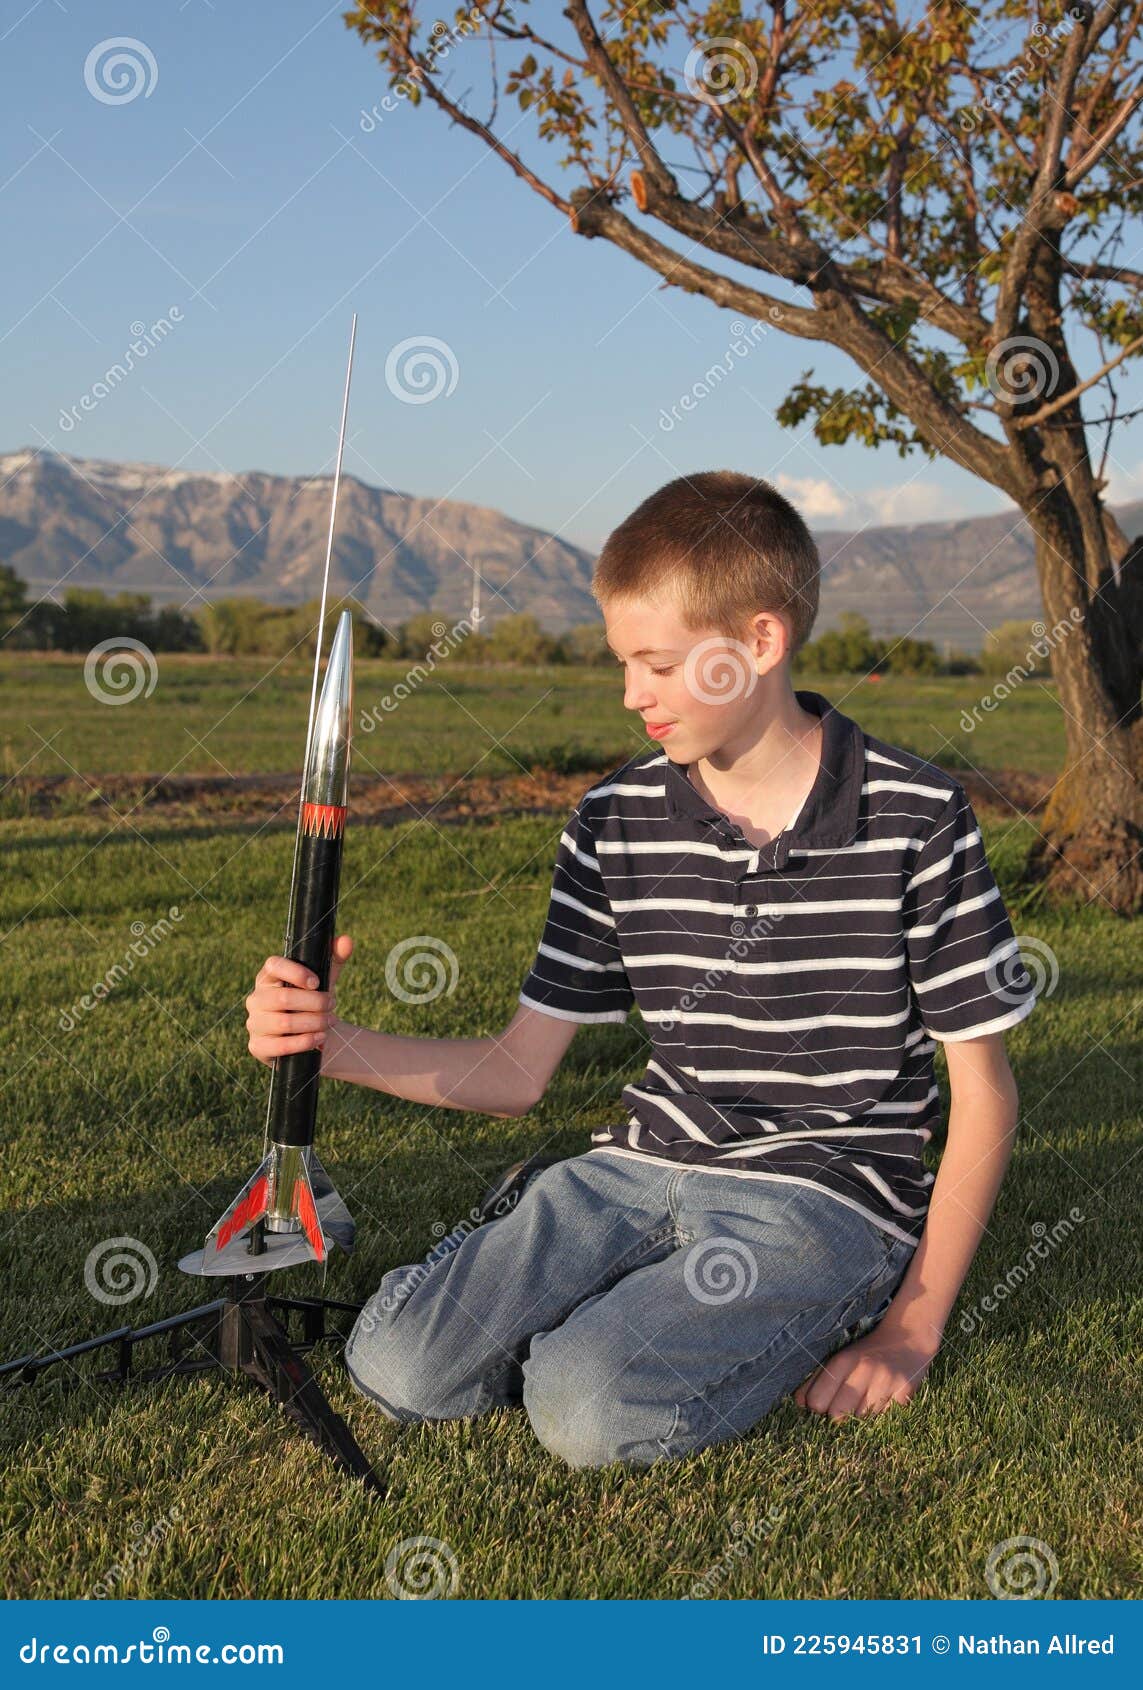 Teenage Boy Launching a Model Rocket Stock Image - Image of flight